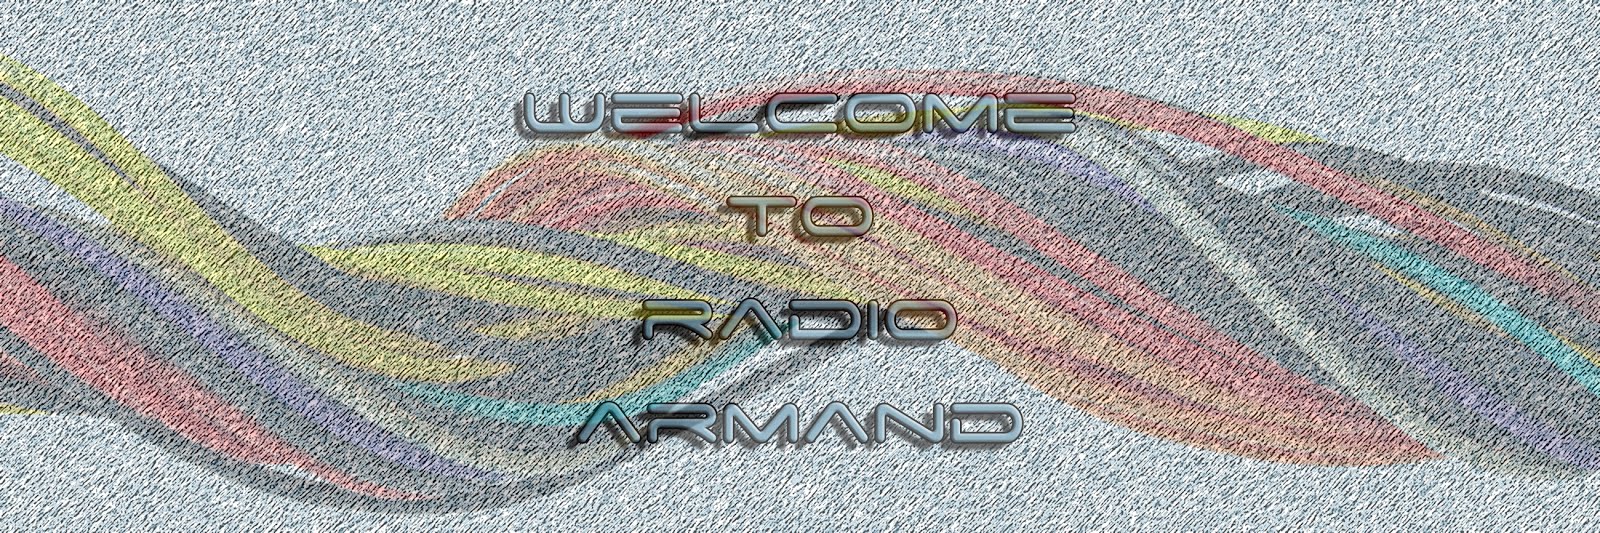 Welcome to Radio Armand